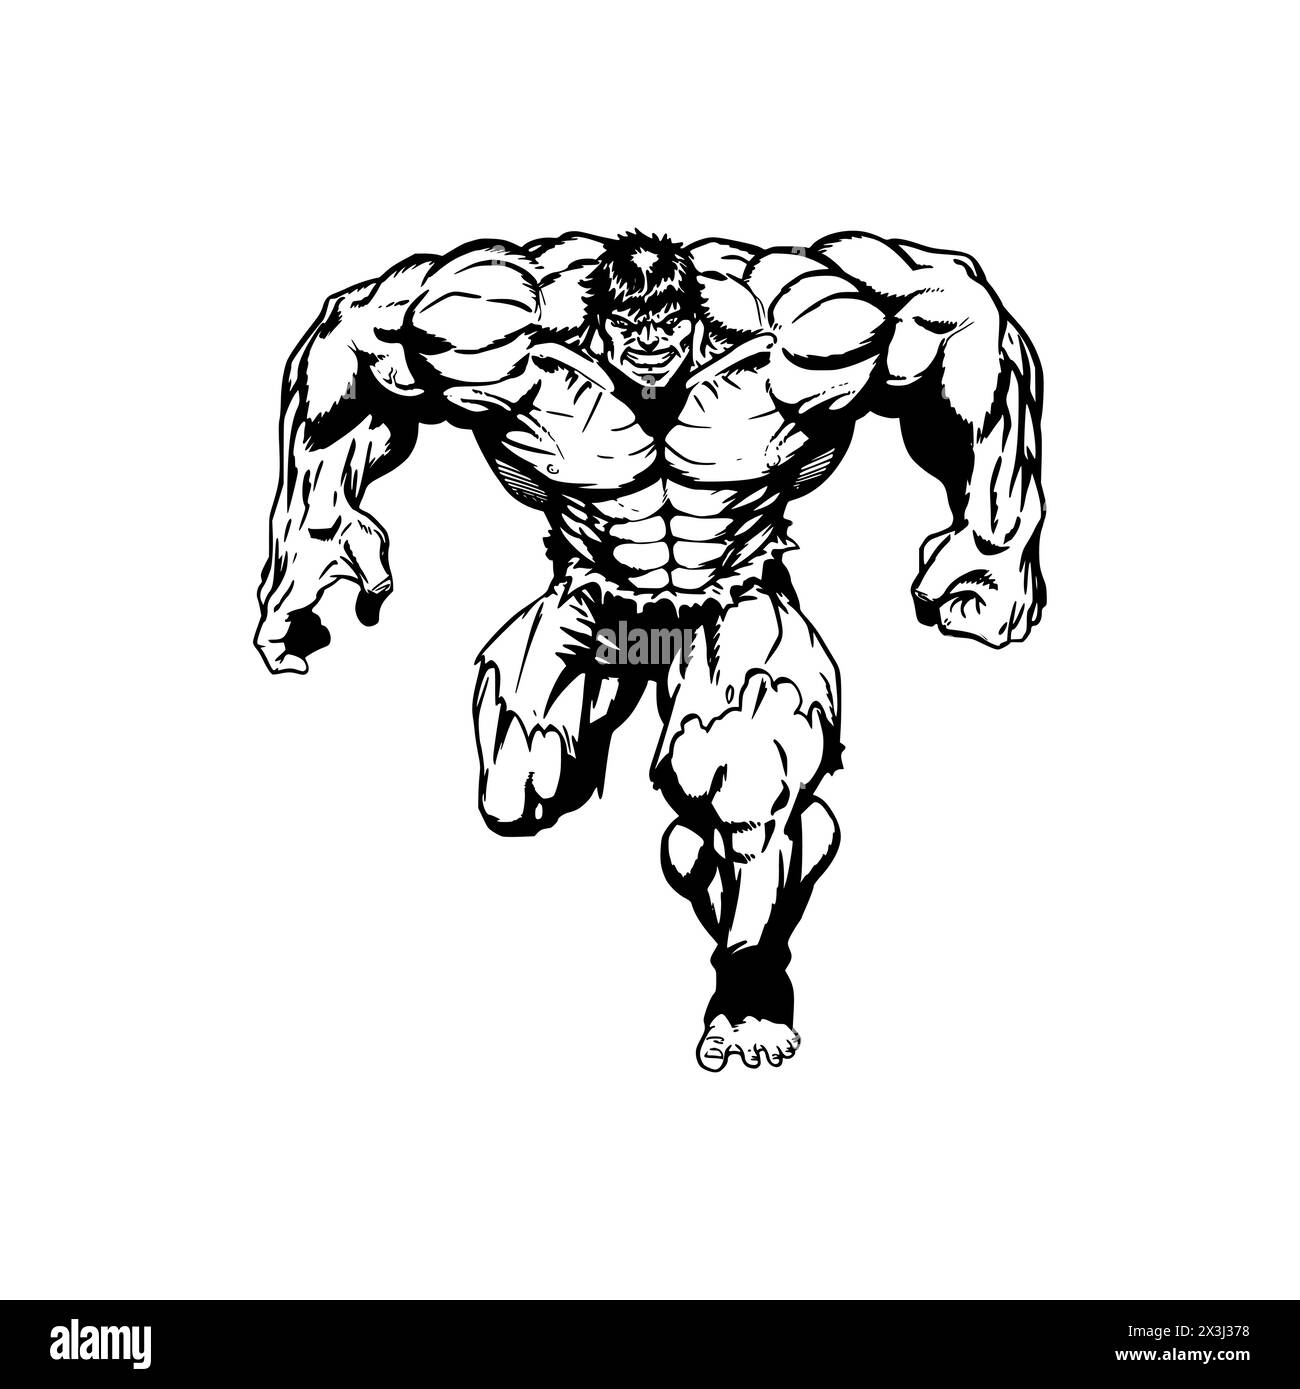 Muscle hulk fighter artwork vector illstration Stock Vector